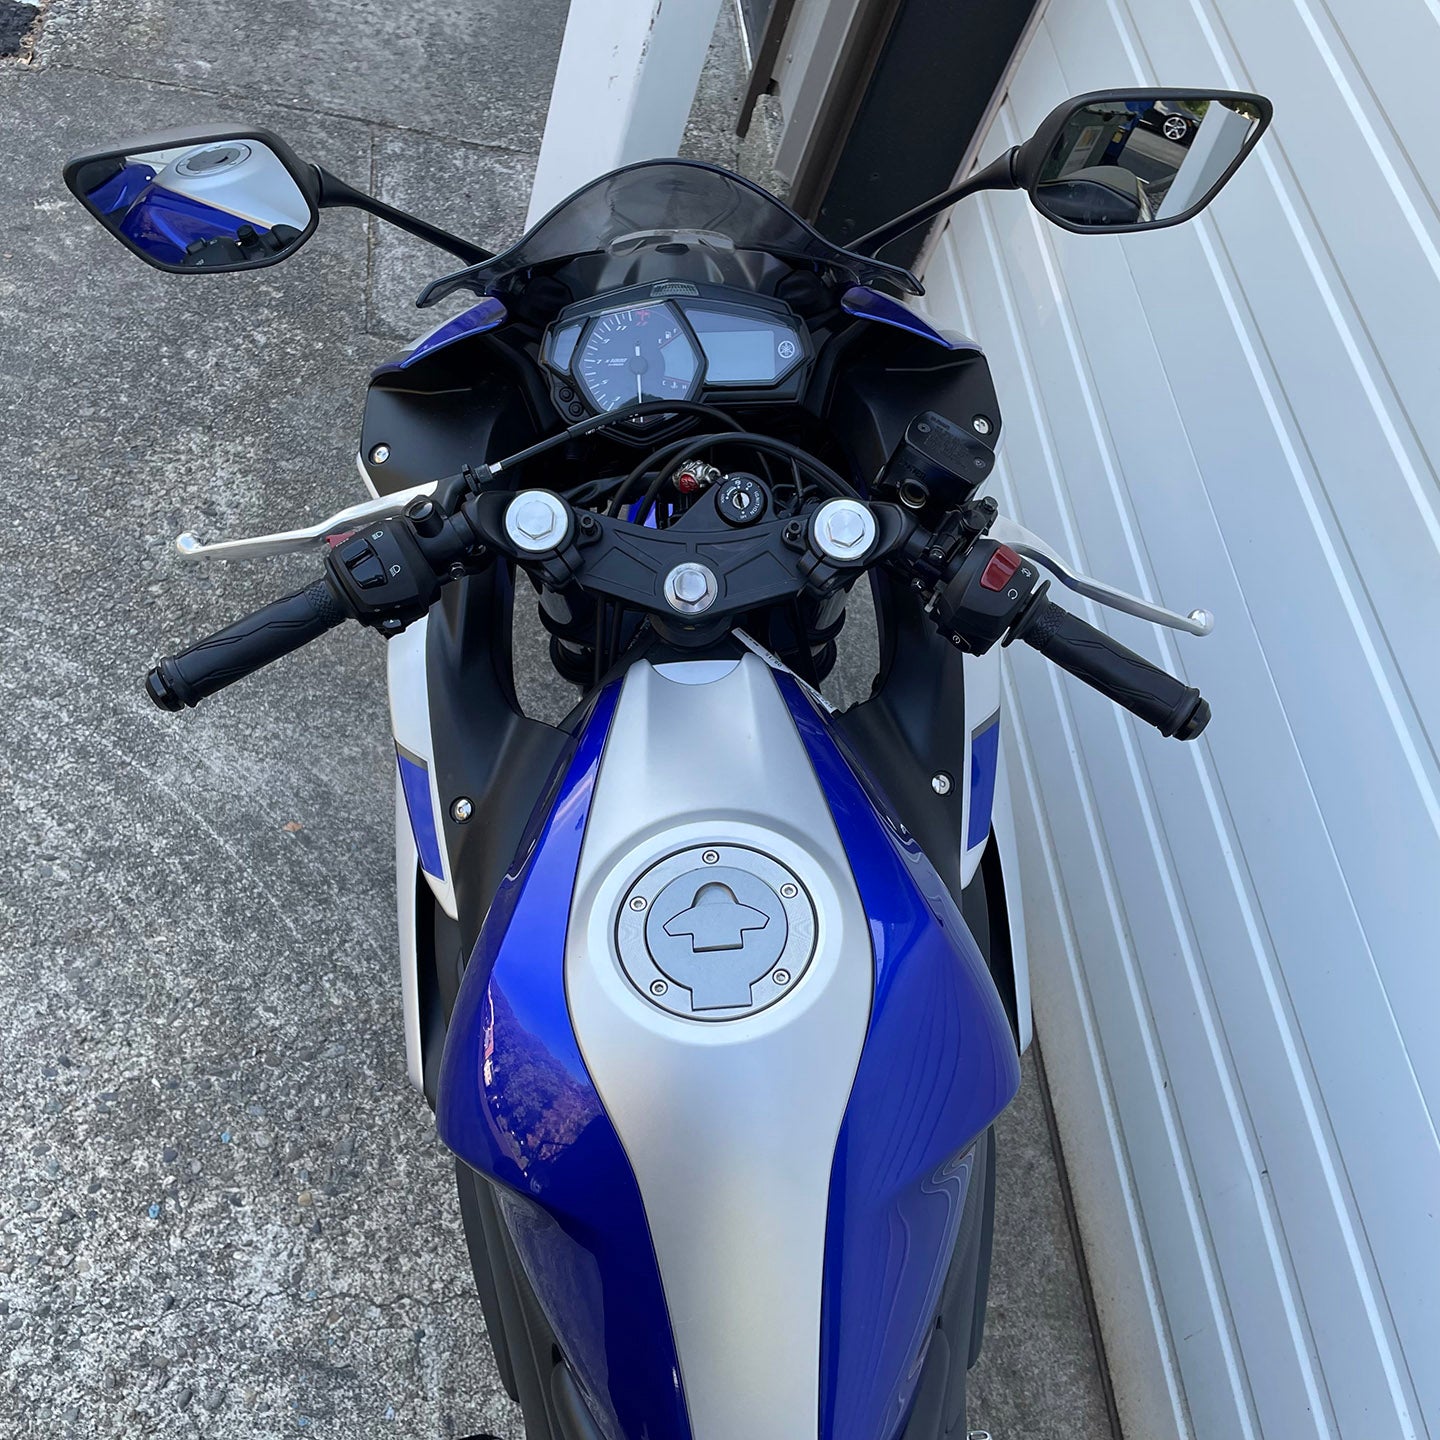 2015 Yamaha YZF-R3 (3,025 Miles)